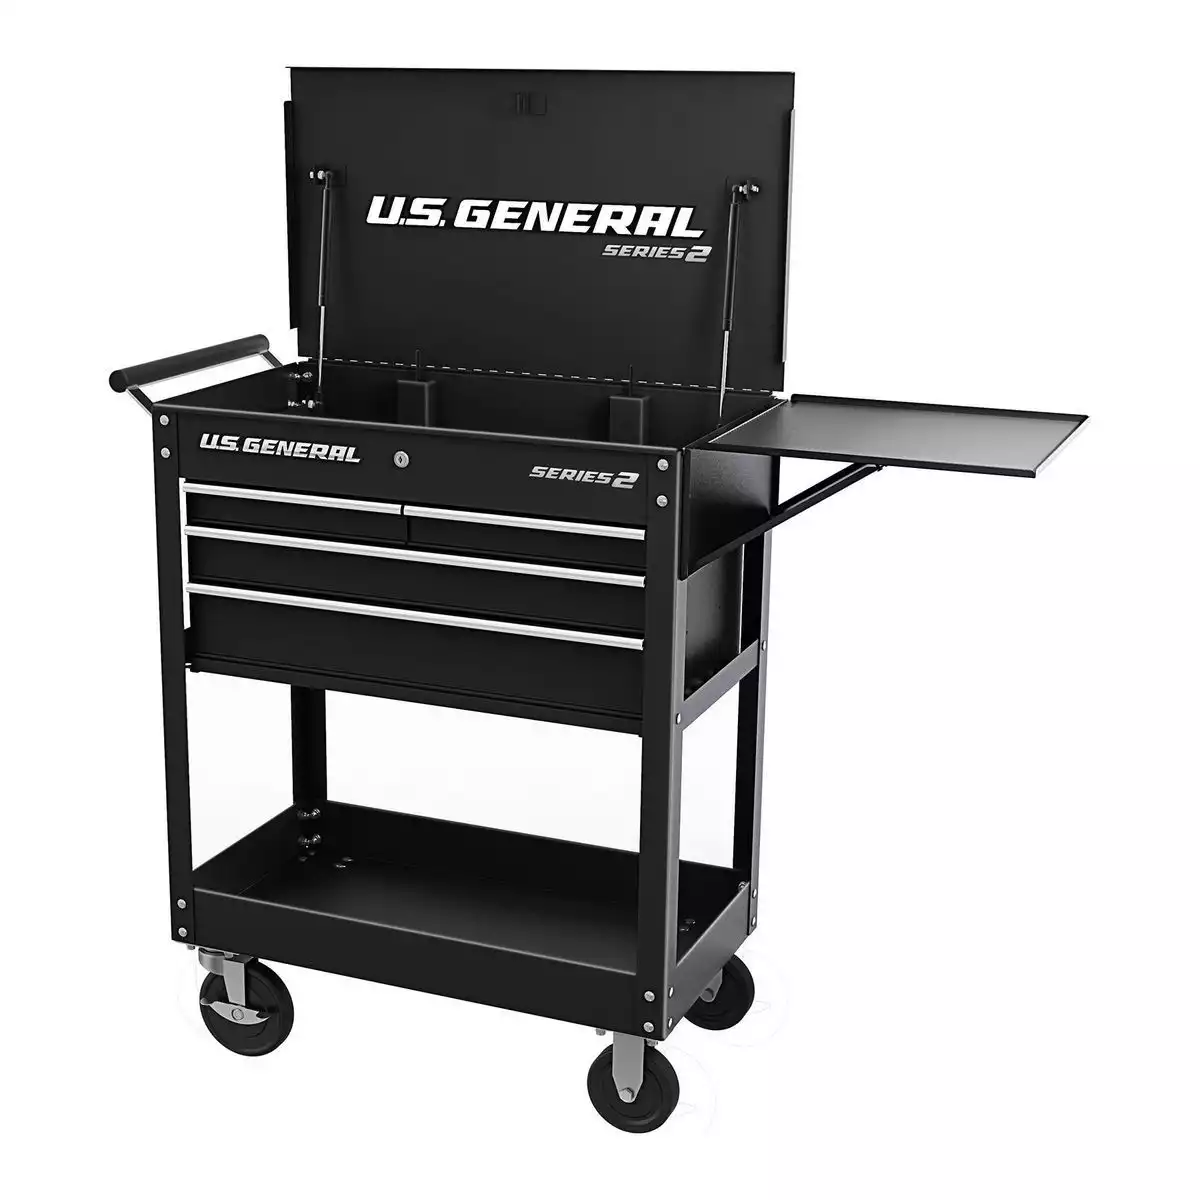 U.S. GENERAL 30 in. 4-Drawer Tech Cart